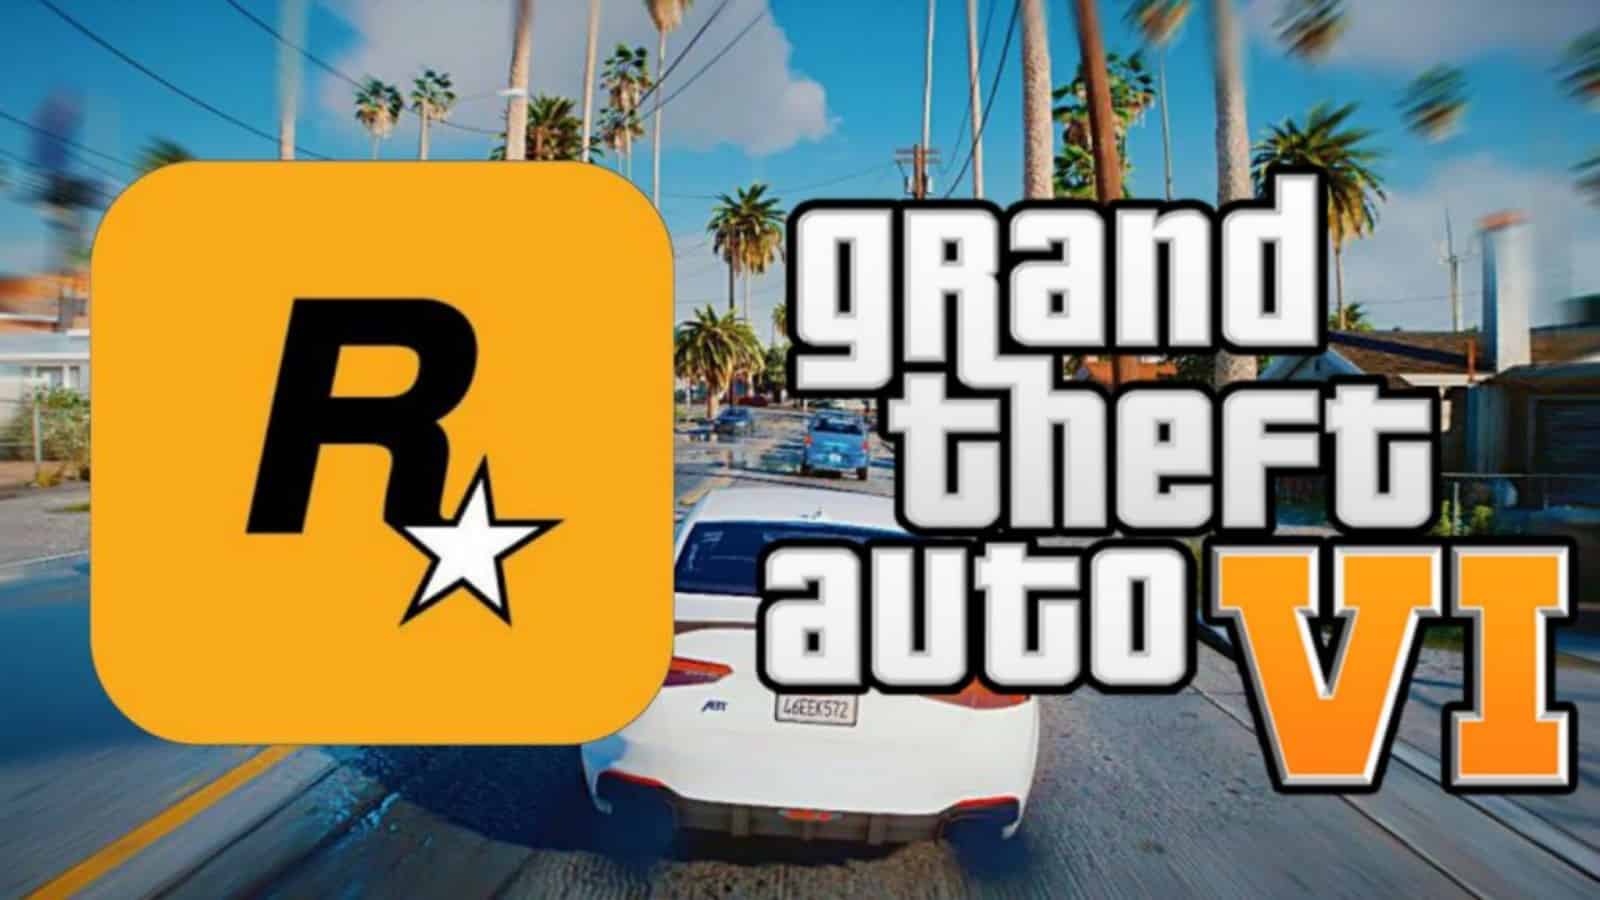 GTA 6 CONFIRMED: Rockstar reveals development on GTA 6 'well